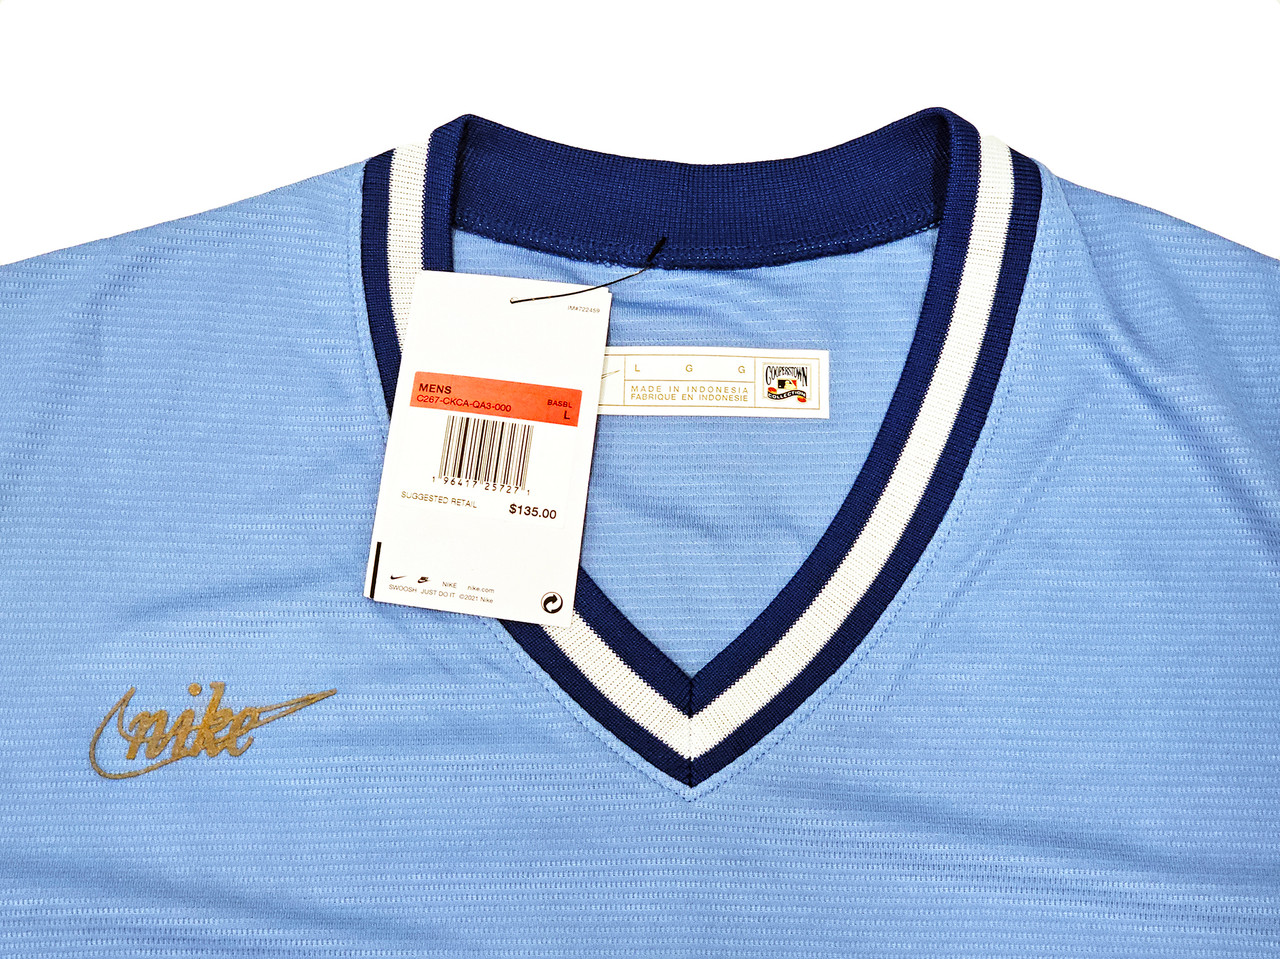 Bo Jackson Kansas City Royals Nike Cooperstown Collection Name & Number  T-Shirt - Royal